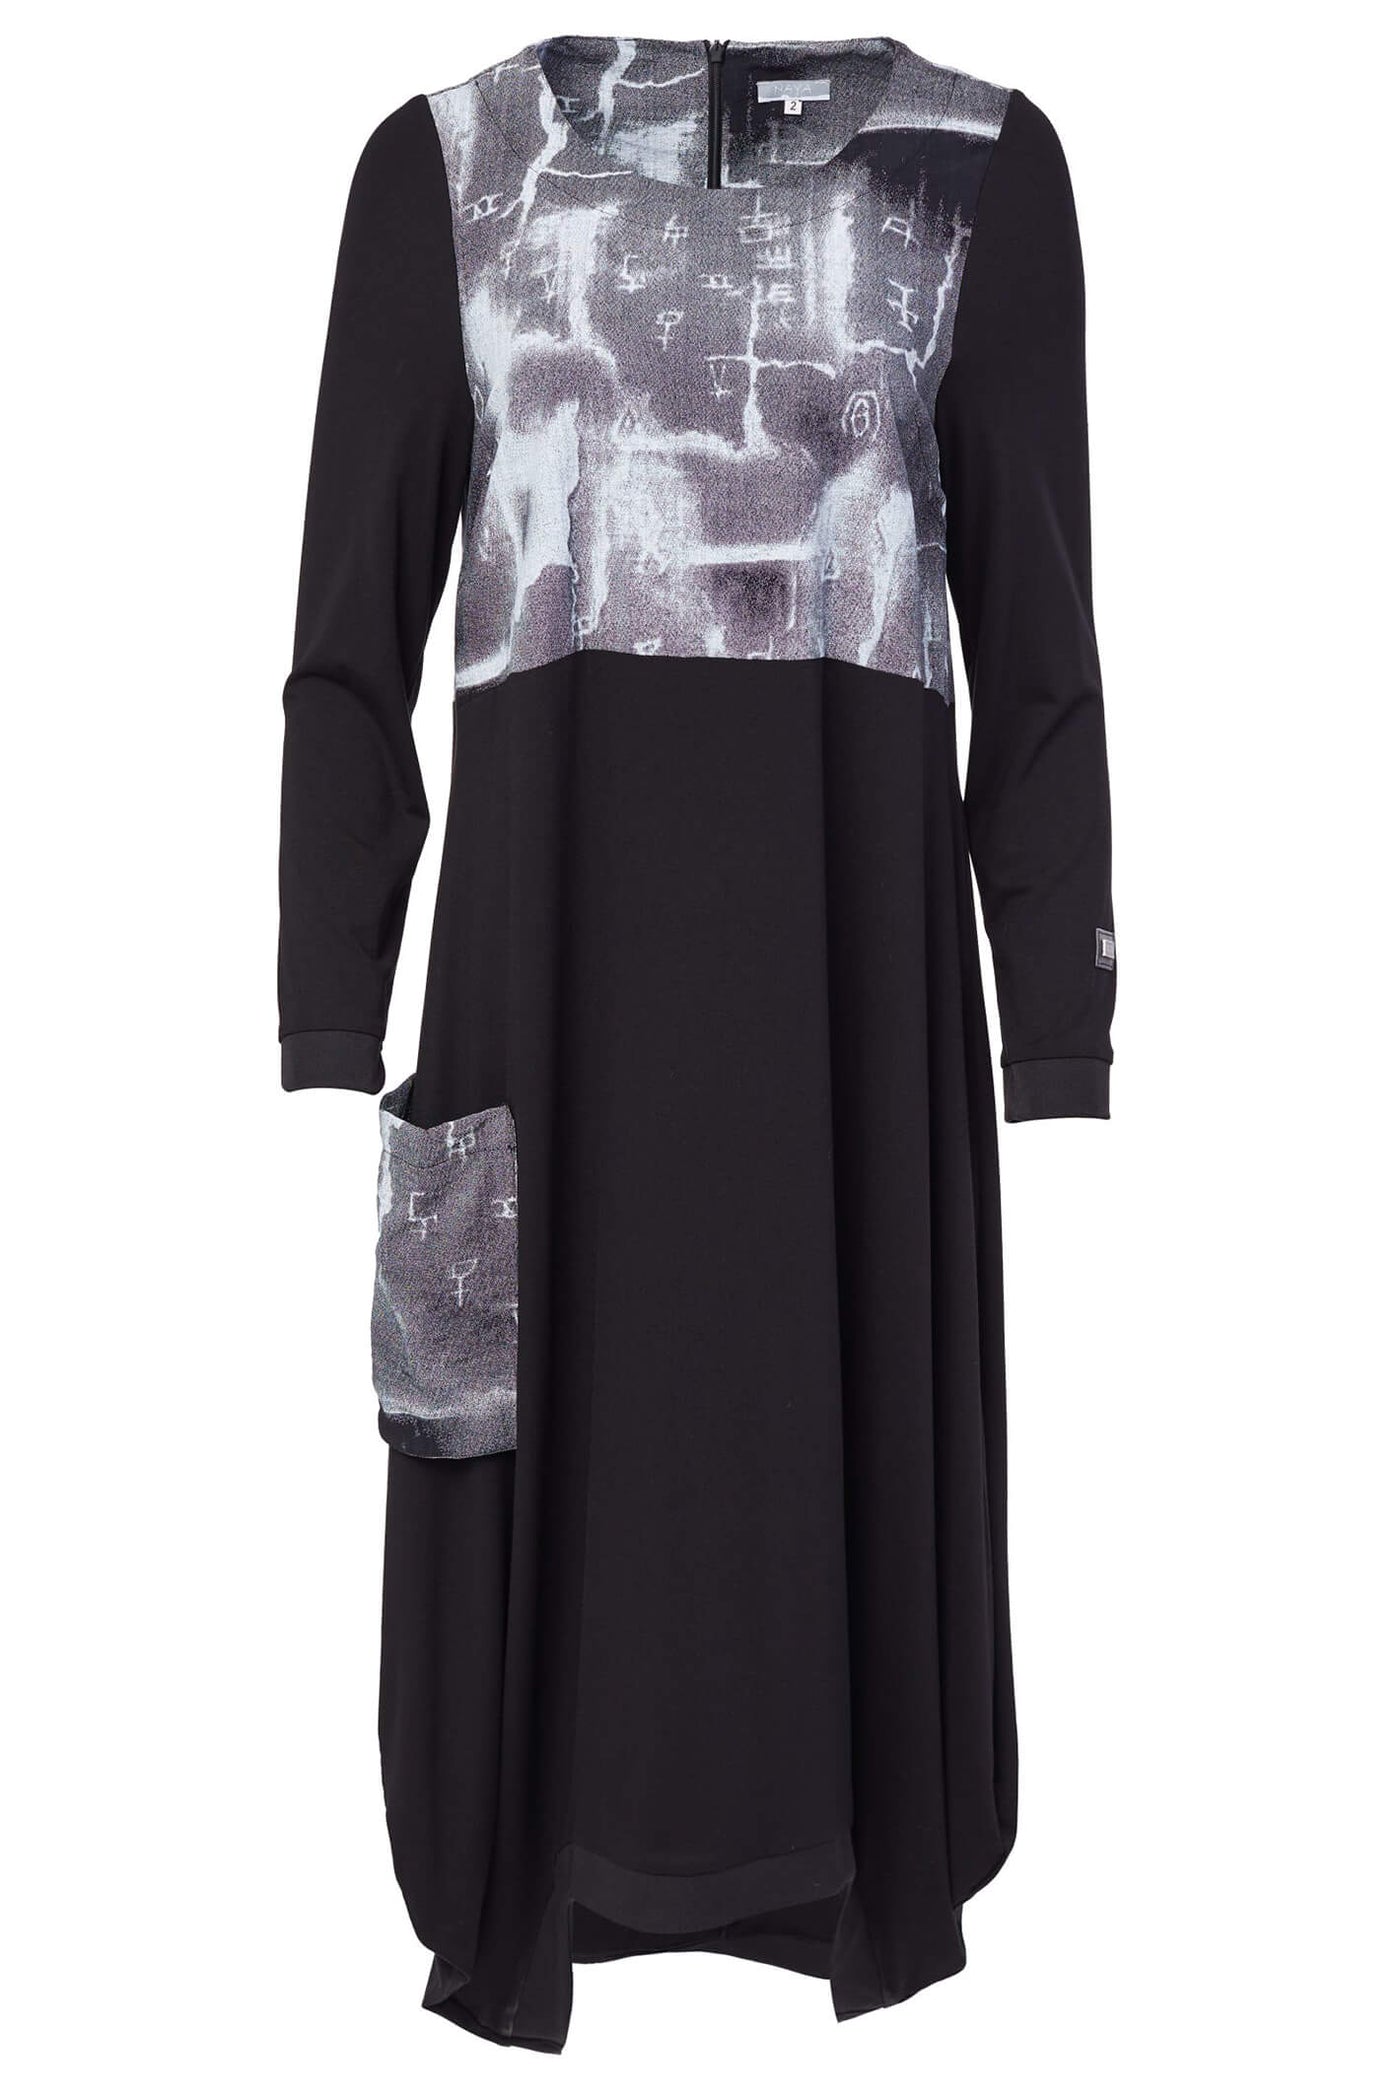 Naya NAW23236 Black Print Dress With Sleeves - Rouge Boutique